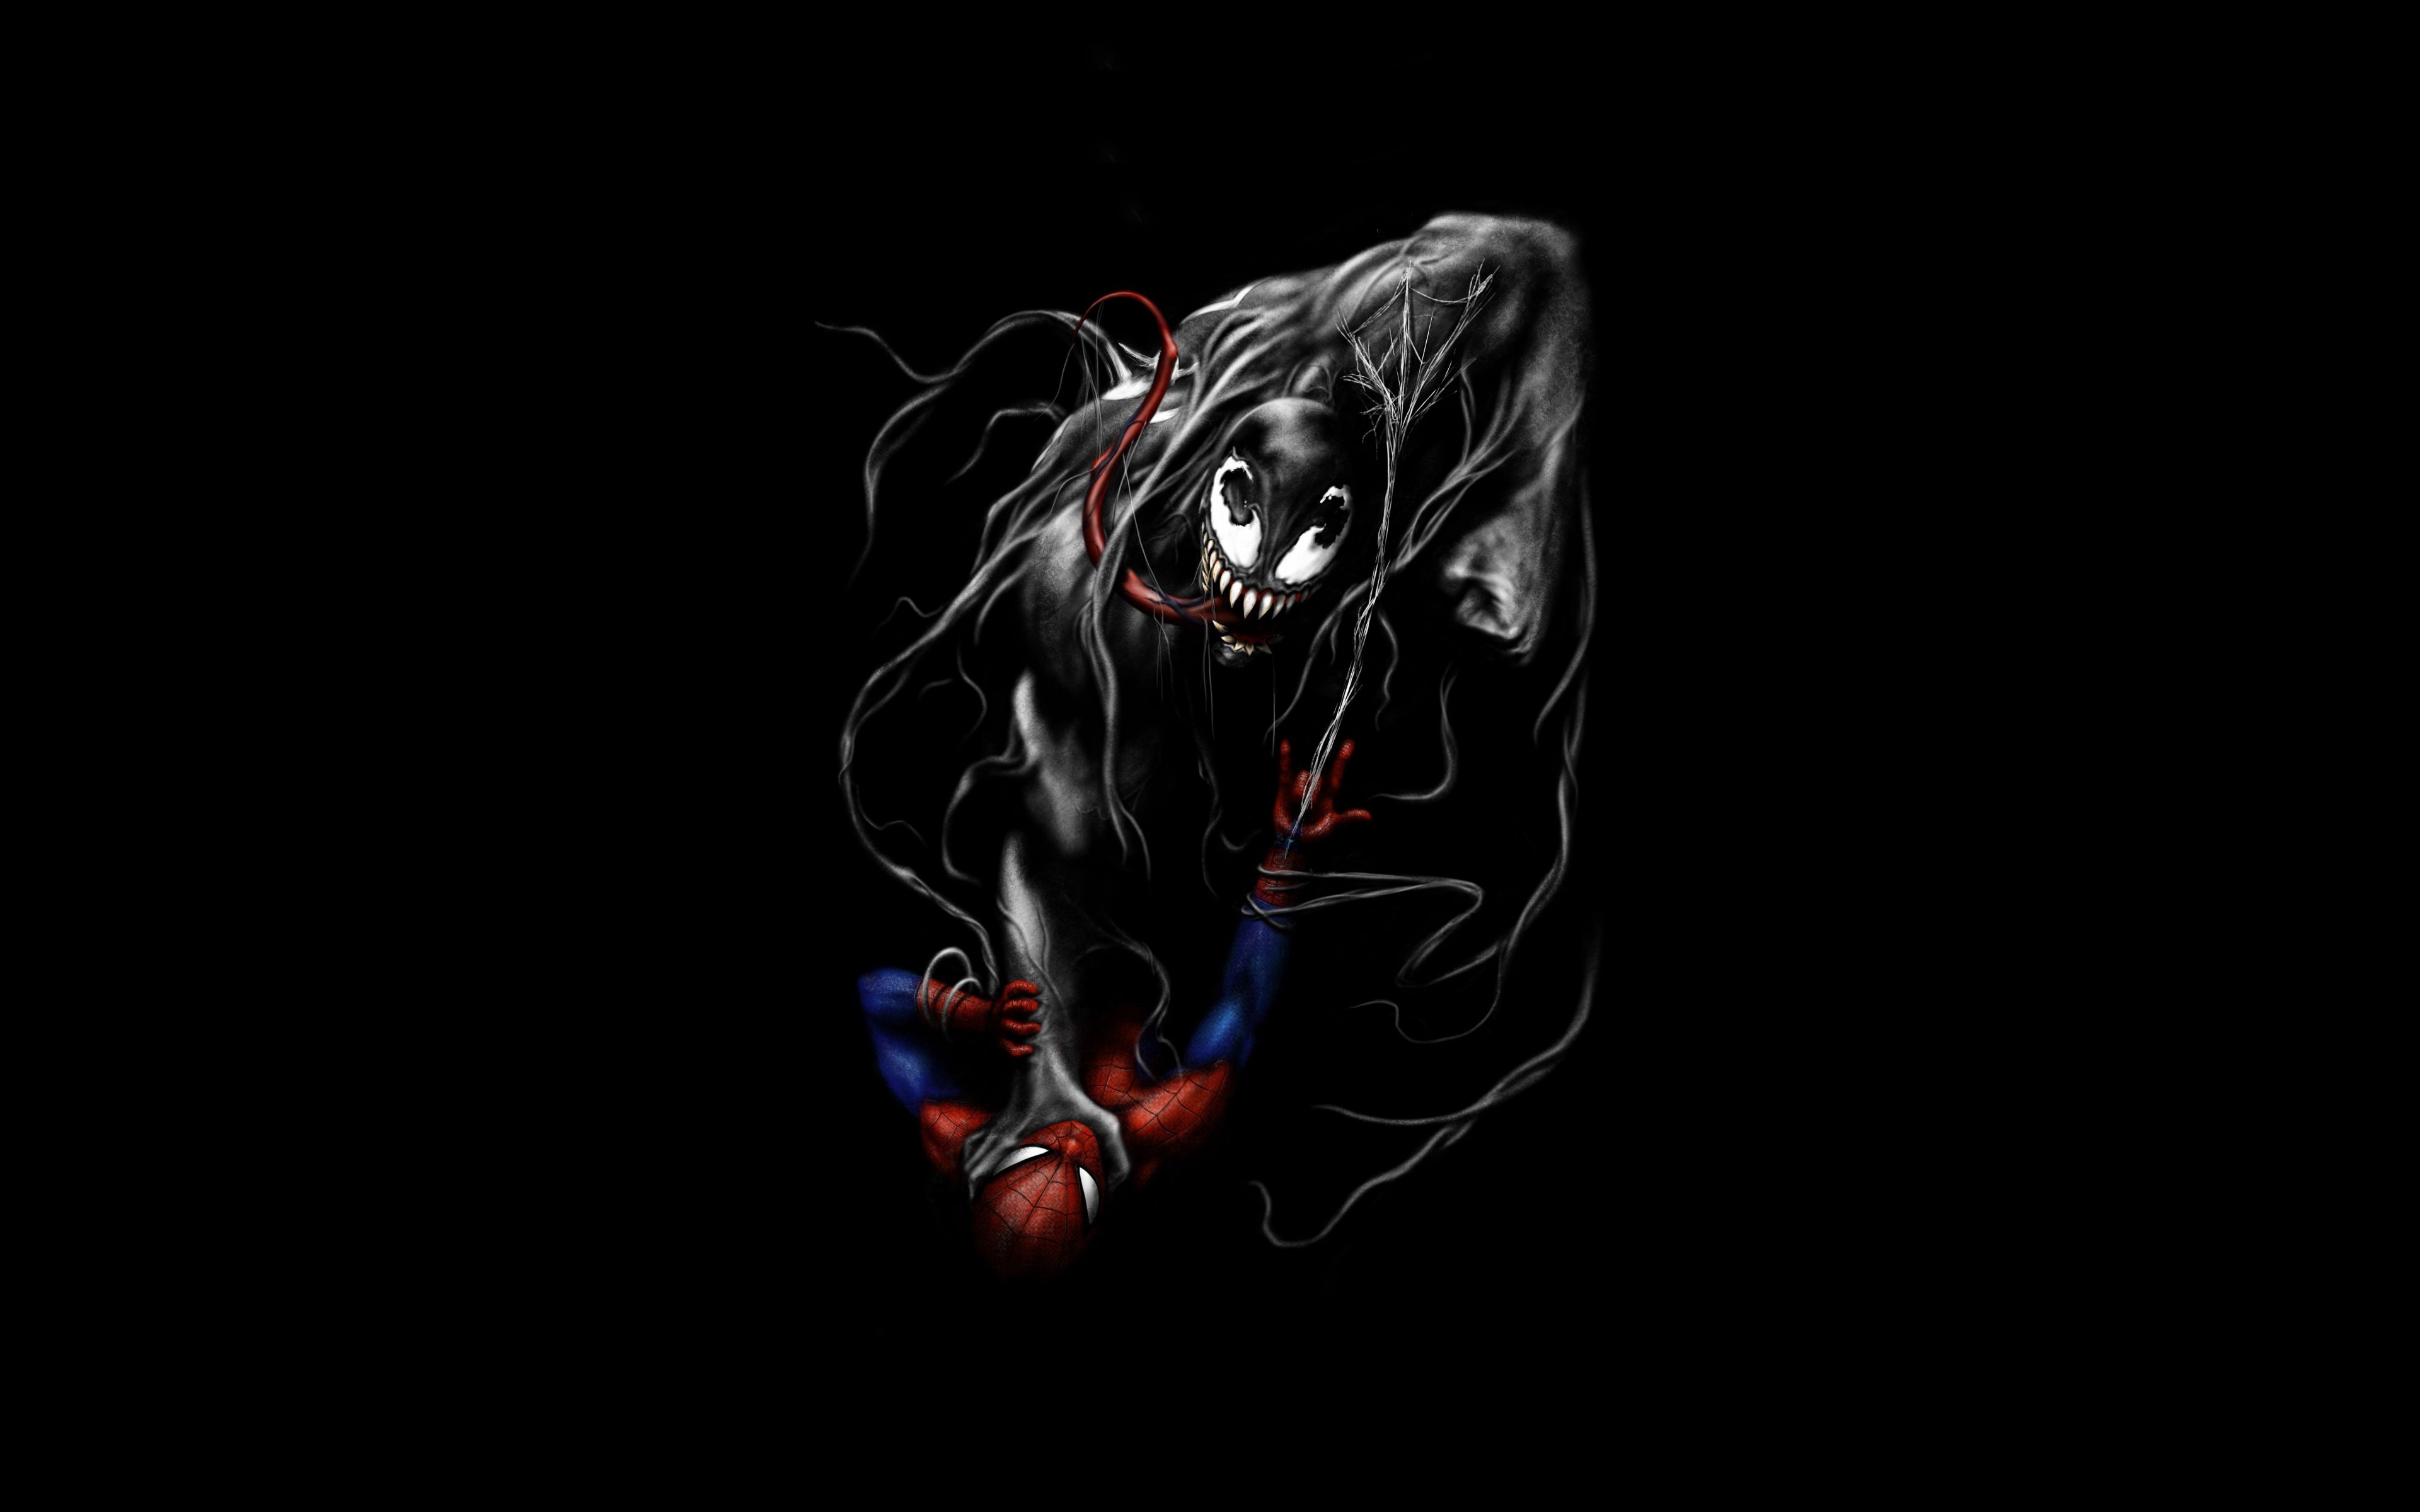 Download 3840x2400 Wallpaper Venom And Spider Man, Fight, Black And Dark, Minimal, Art, 4k, Ultra HD 16: Widescreen, 3840x2400 HD Image, Background, 10437